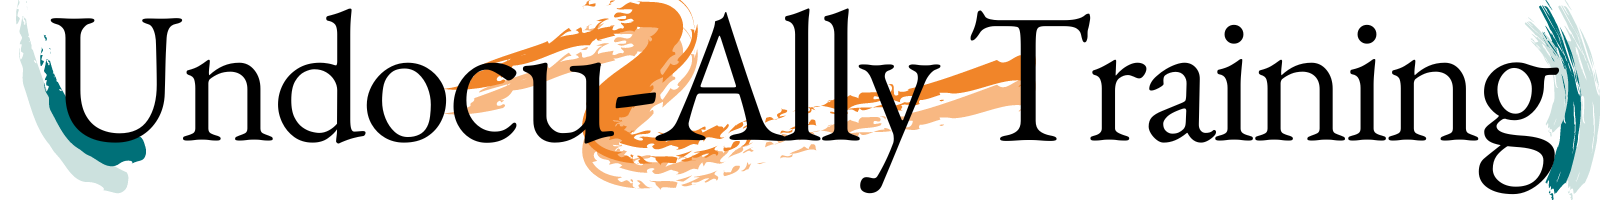 Undocu-Ally Training Logo